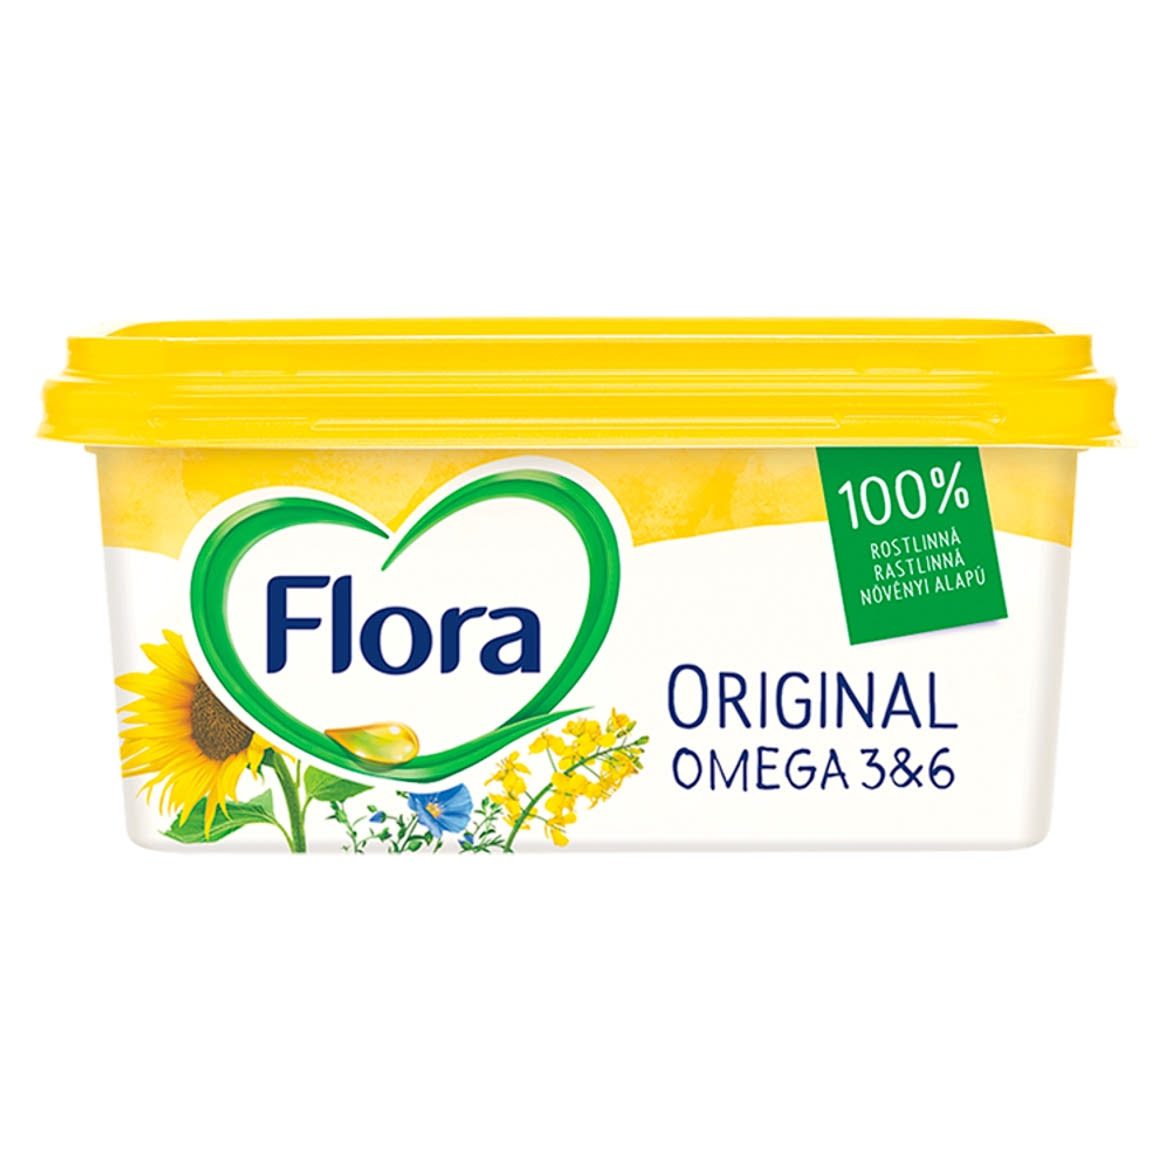 Flora Original margarin